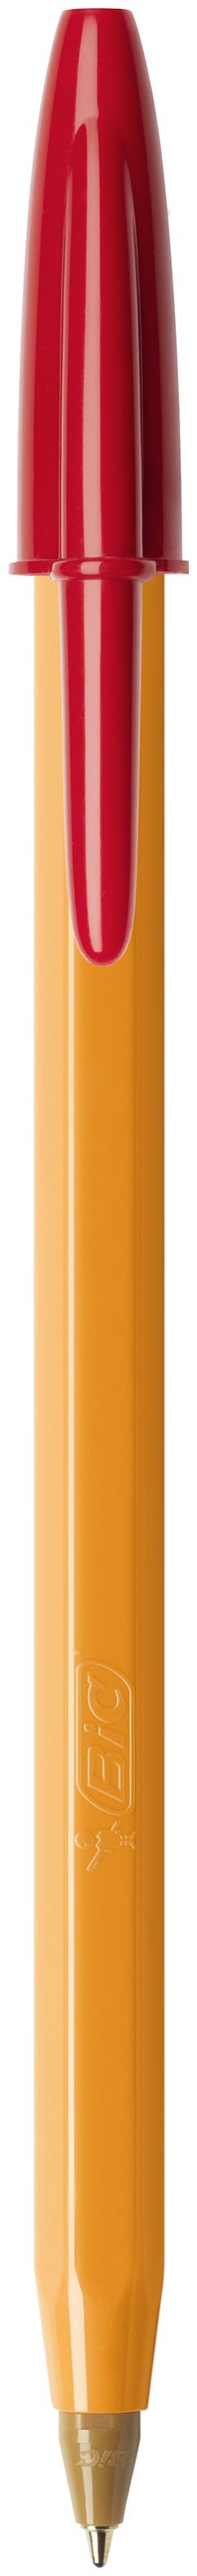 Stylo bille rouge Cristal Orange fin Bic - Stylo à bille - Creavea